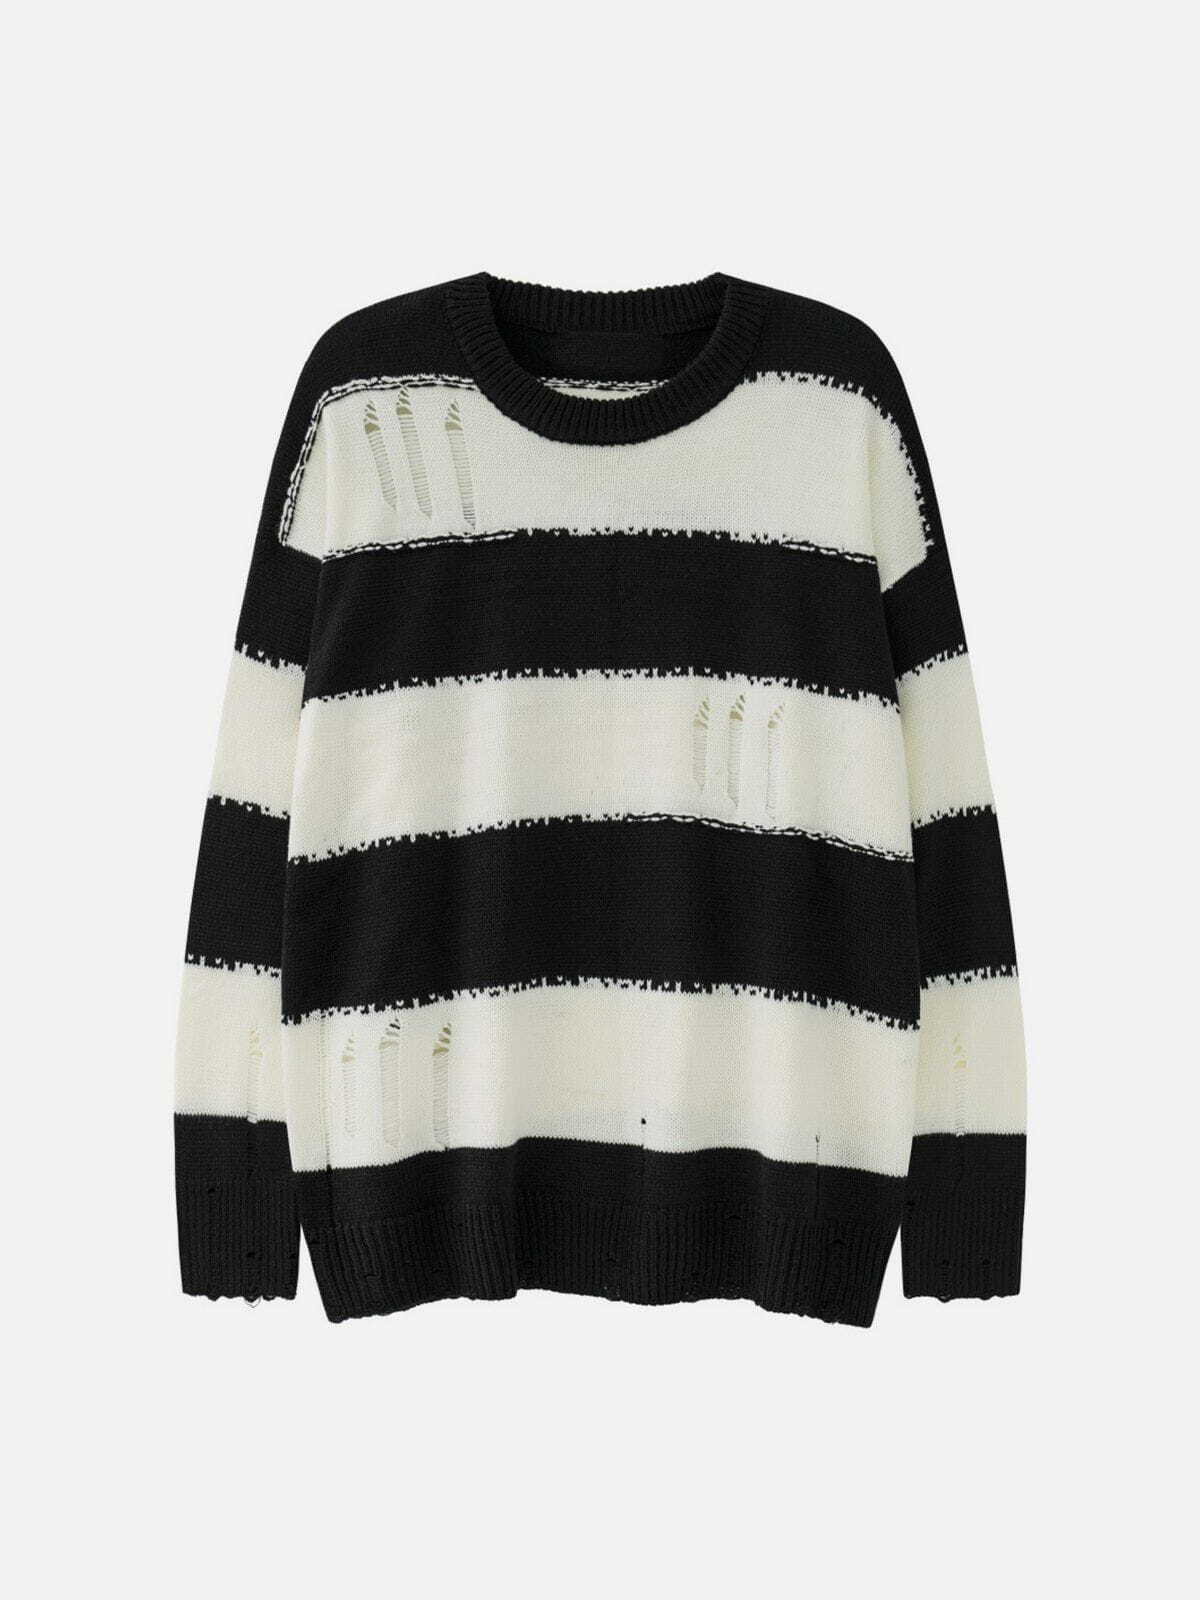 ripped jacquard sweater edgy streetwear staple 7108